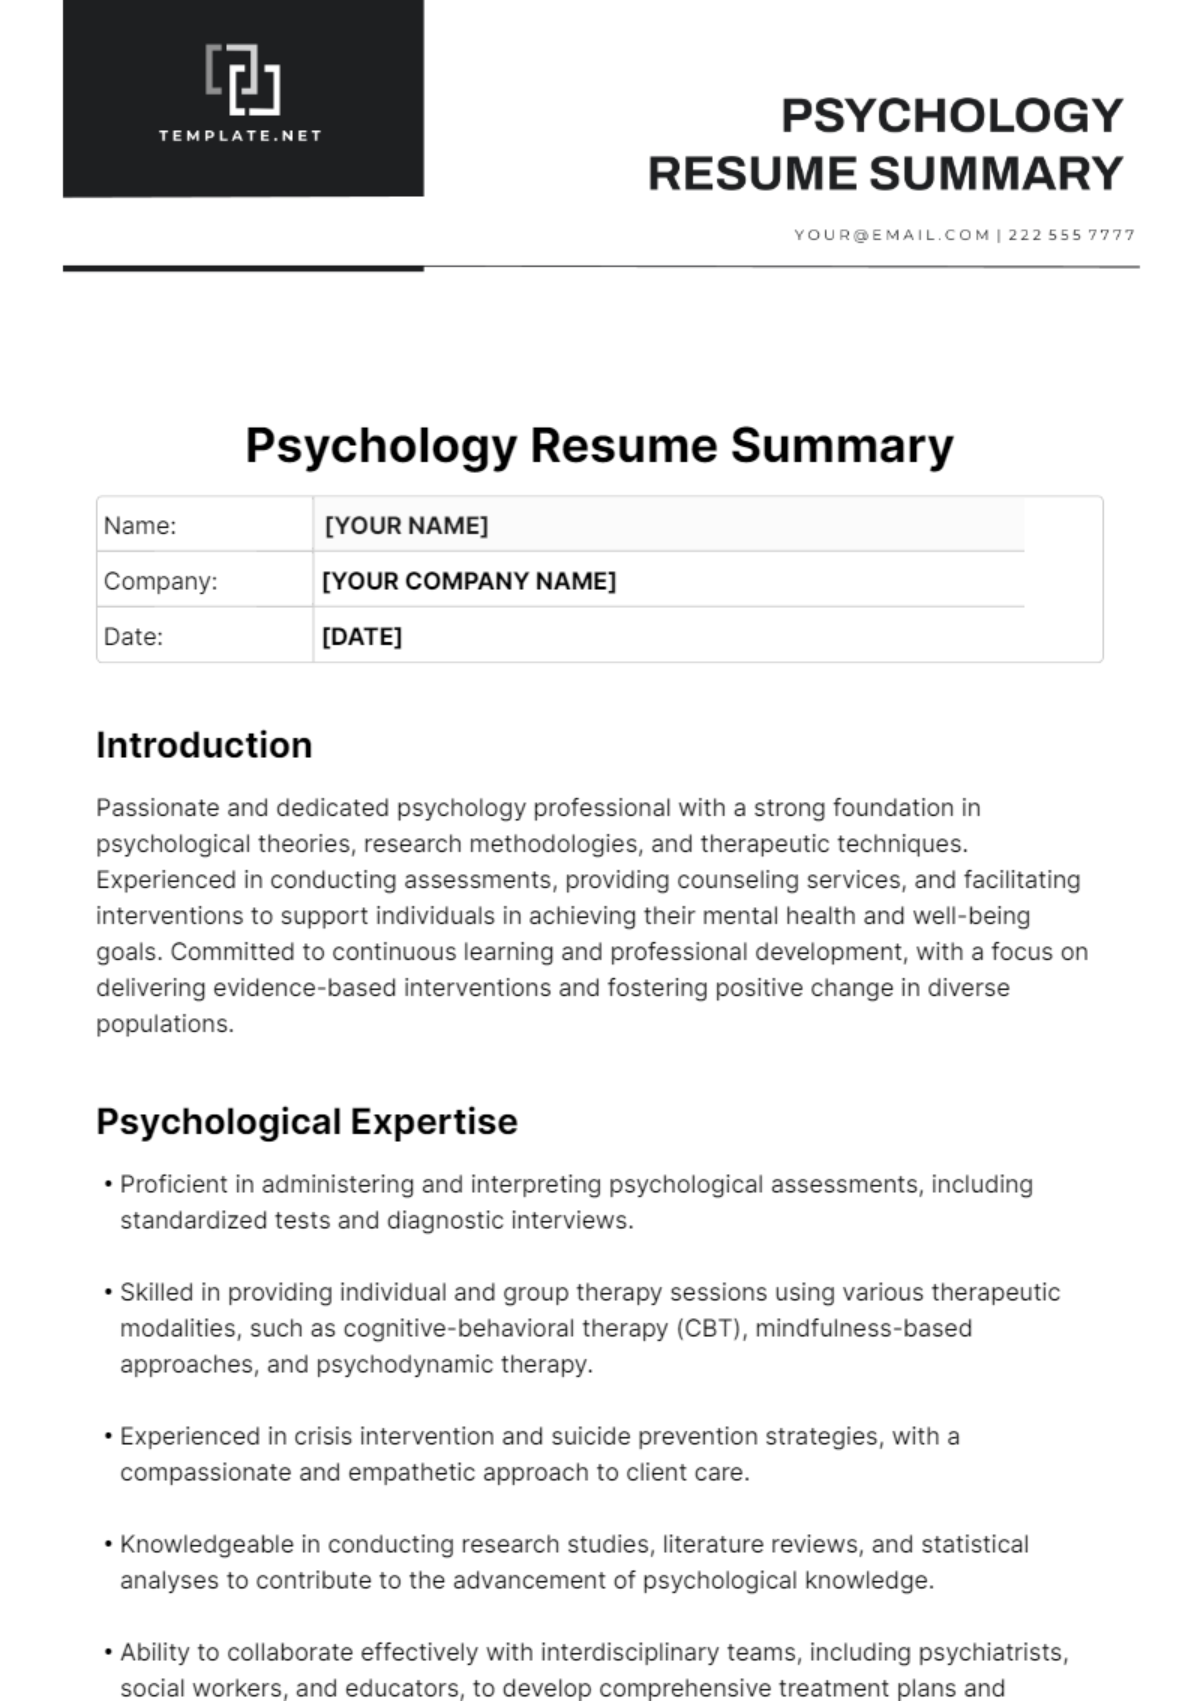 Free Psychology Resume Summary Template 